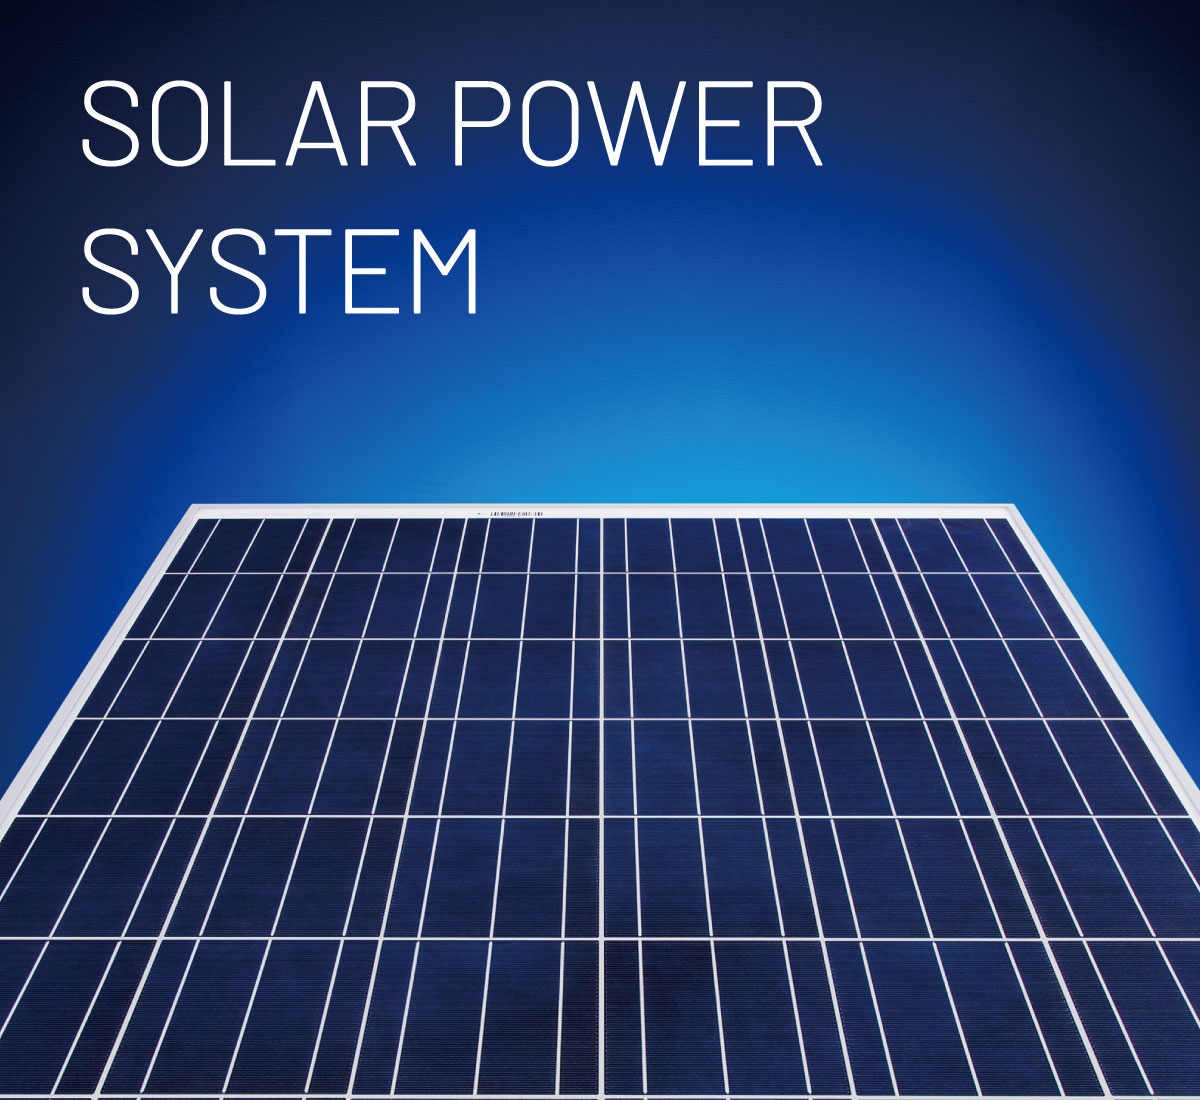 SOLAR POWER SYSTEM